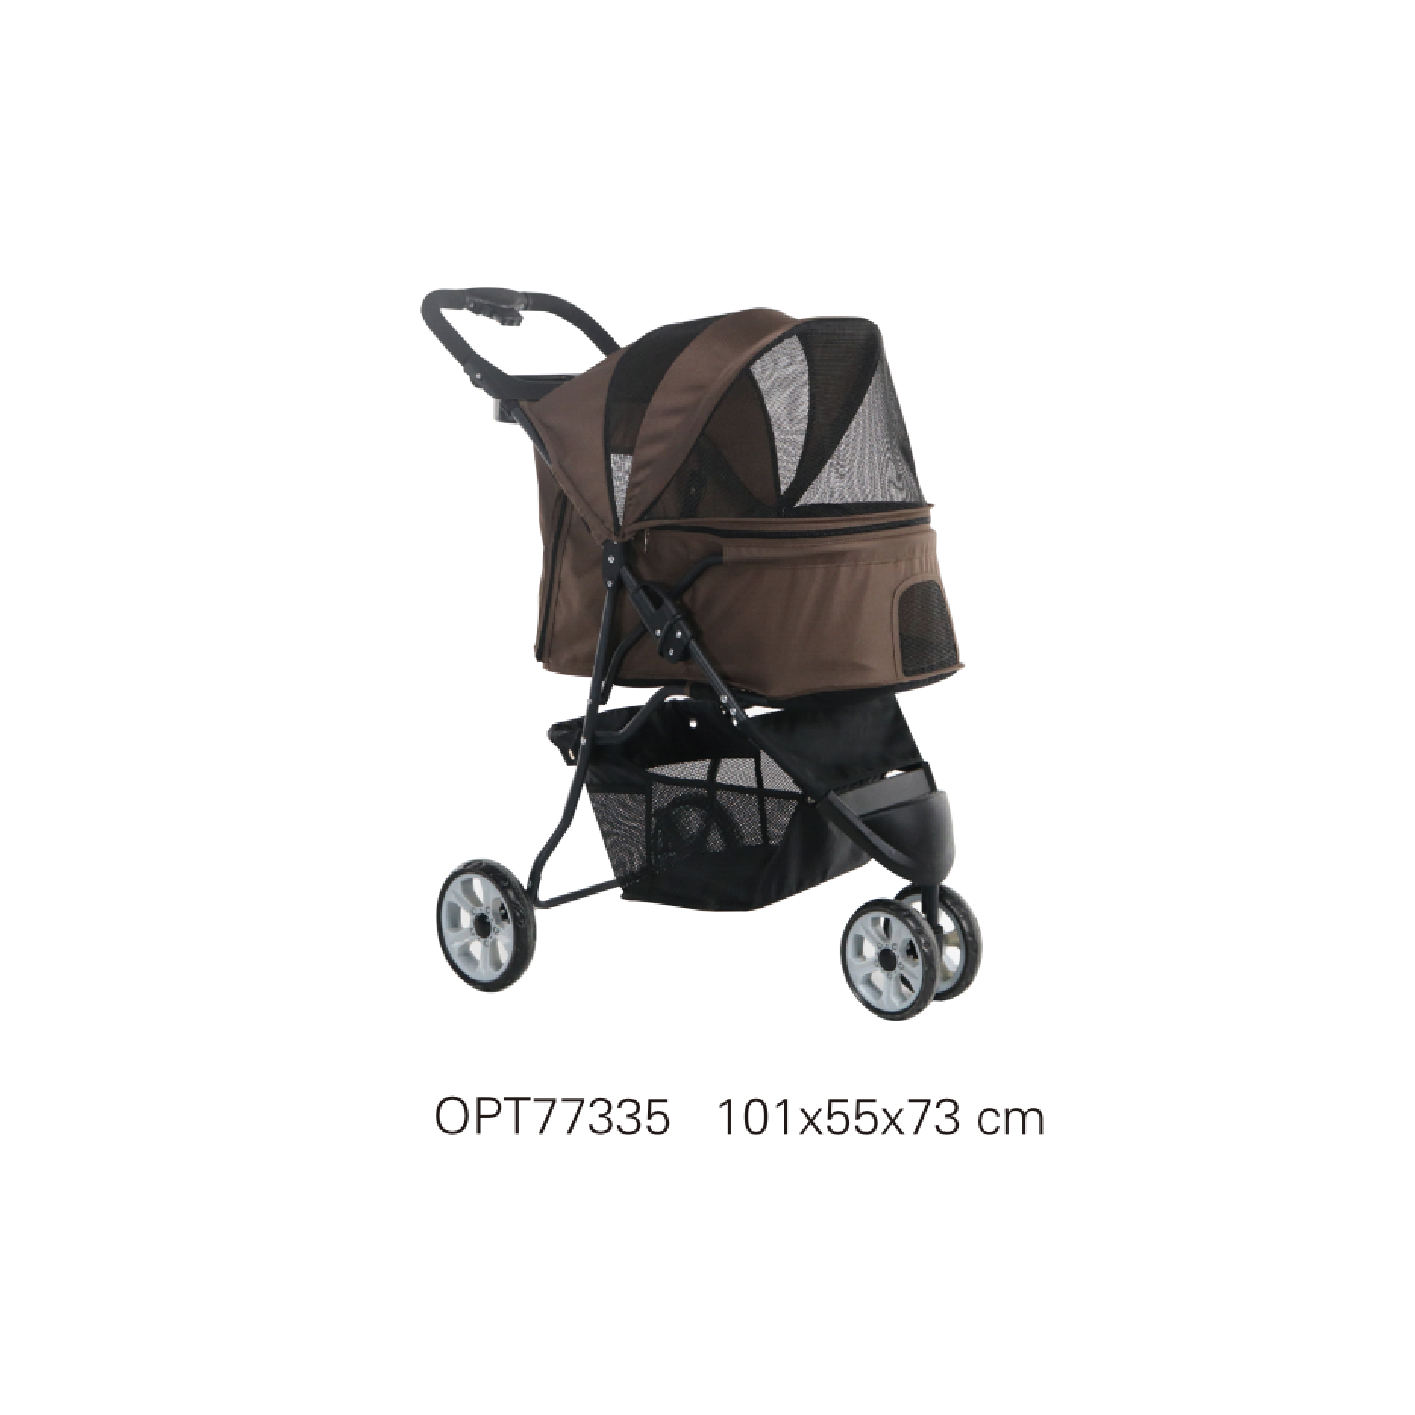 OPT77335 Pet strollers